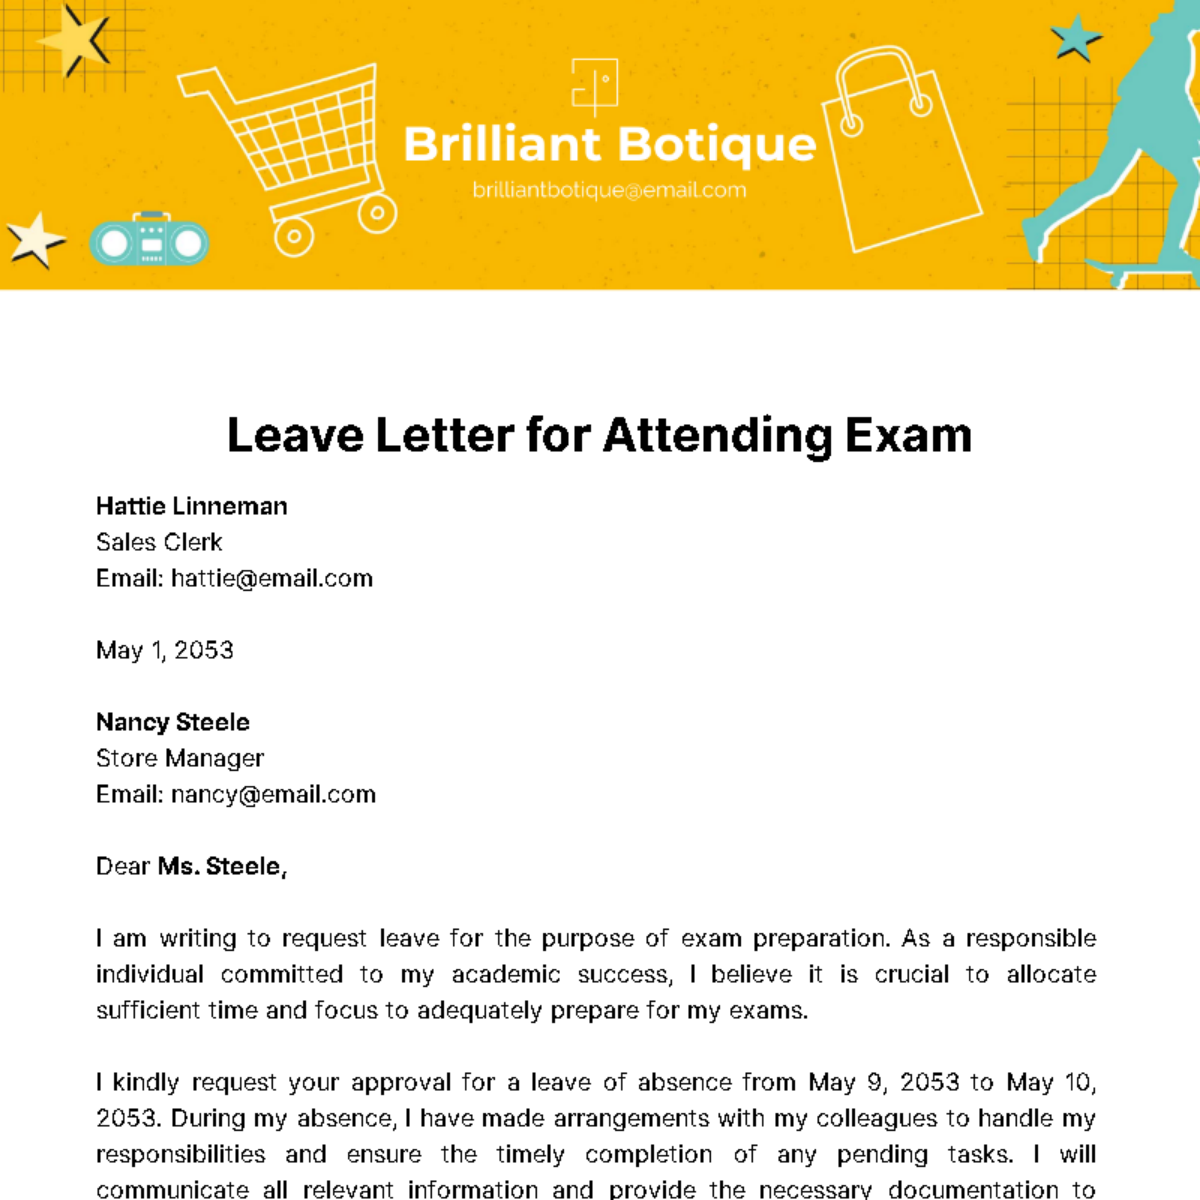 Leave Letter for Attending Exam Template